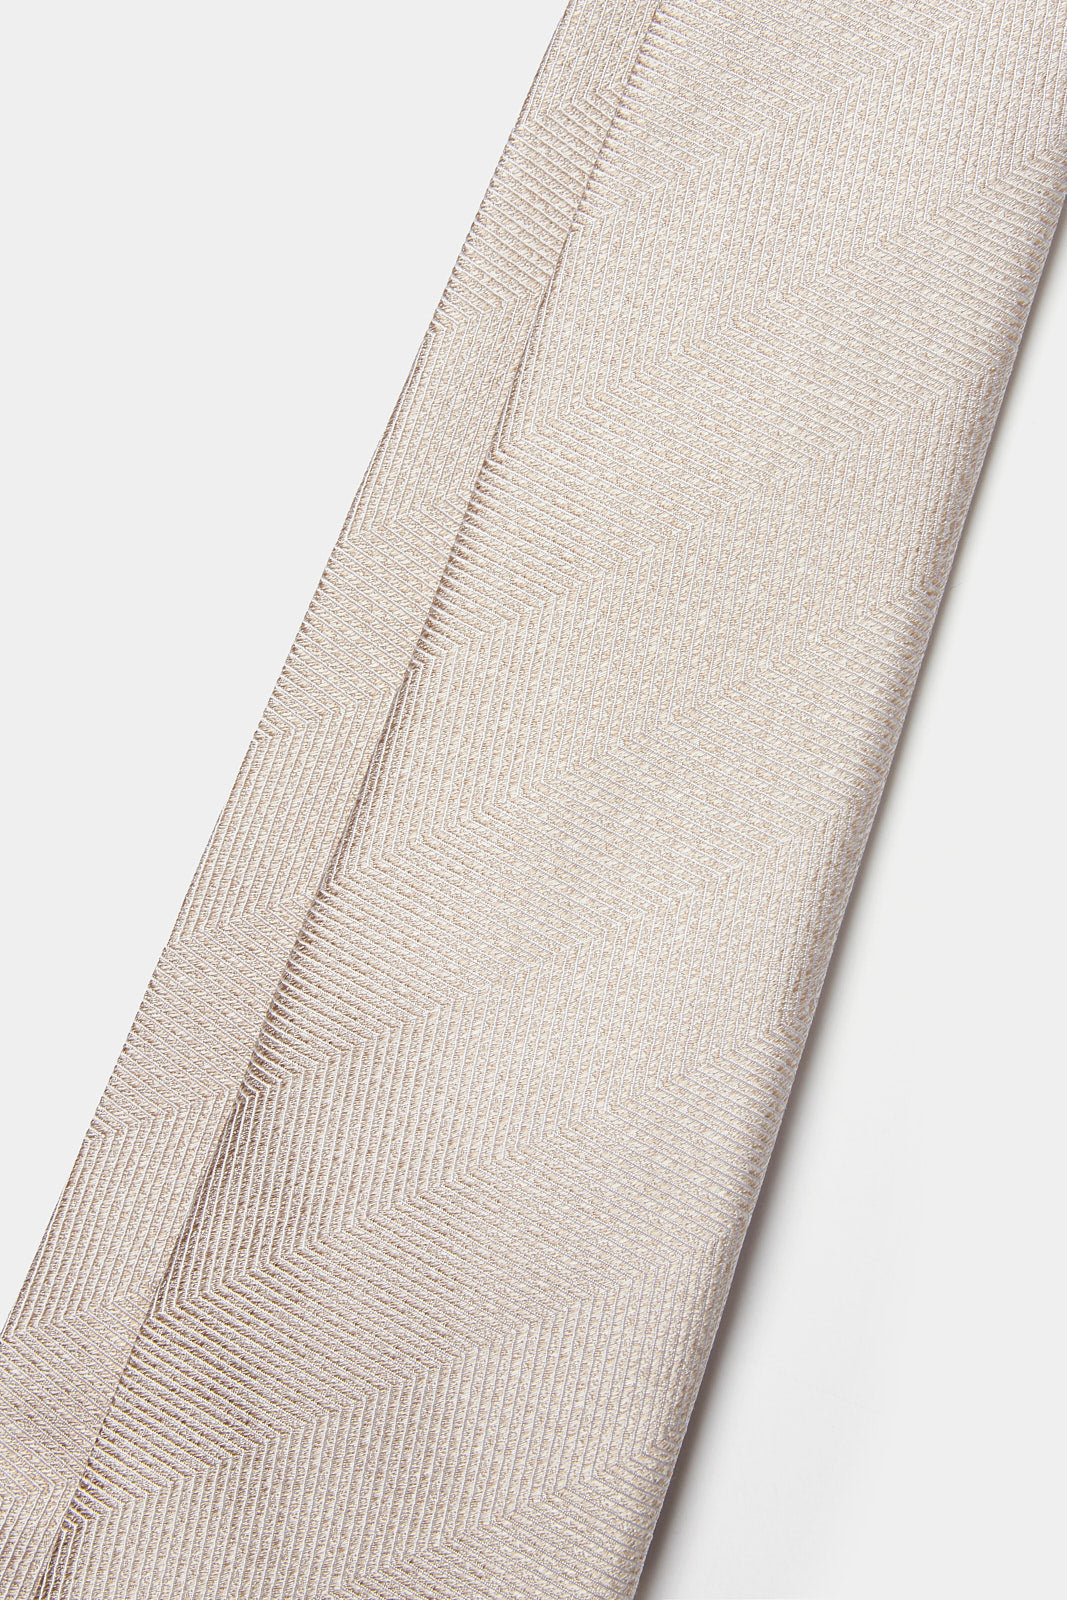 100% Silk Herringbone Tie in Warm Sand